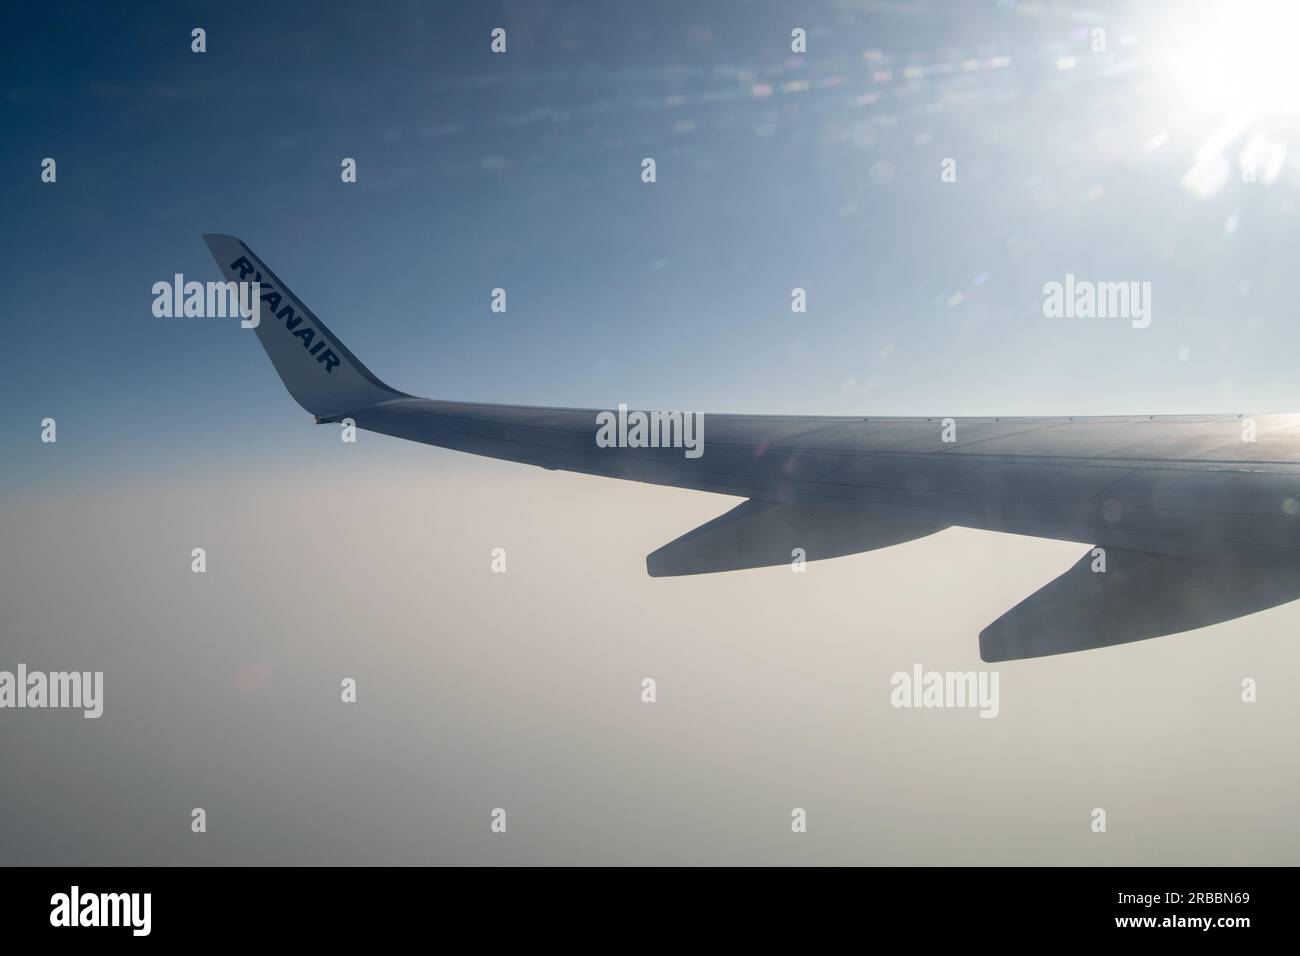 Ryanair flight, airbus wing from Ryanair airbus going to Mallorca island by daylight Stock Photo